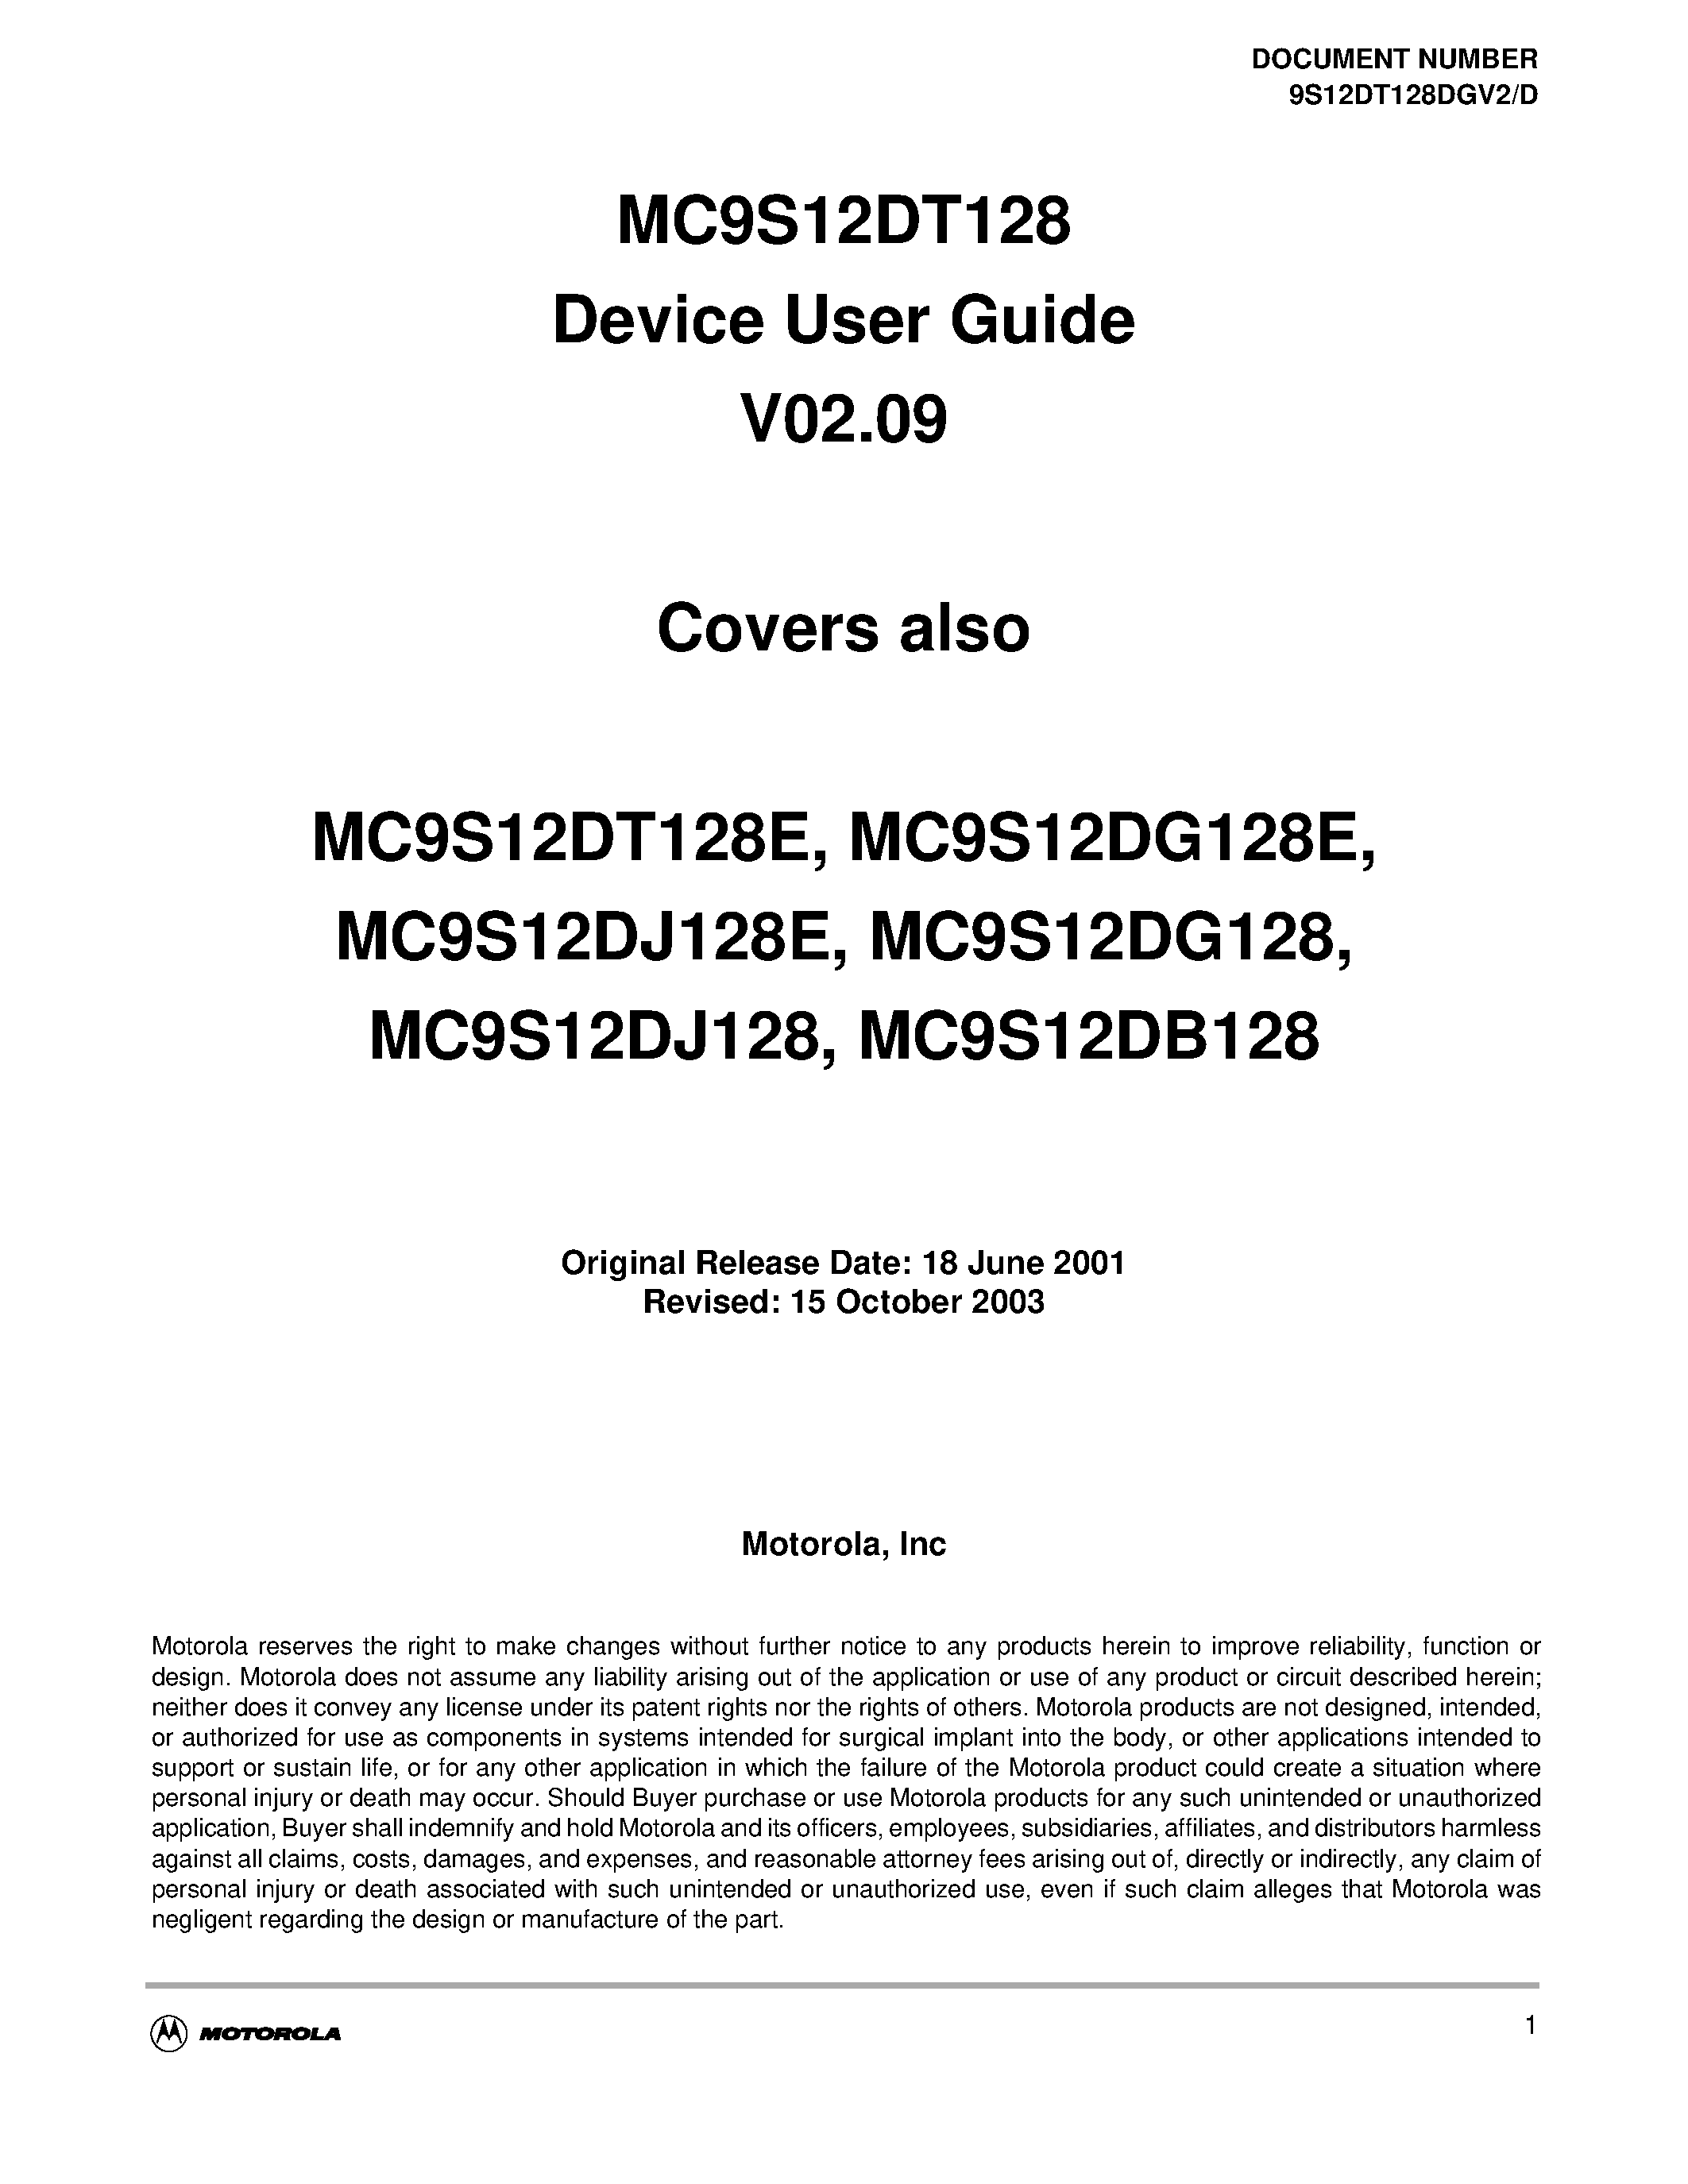 Даташит S12EETS2KV1 - MC9S12DT128 Device User Guide V02.09 страница 1